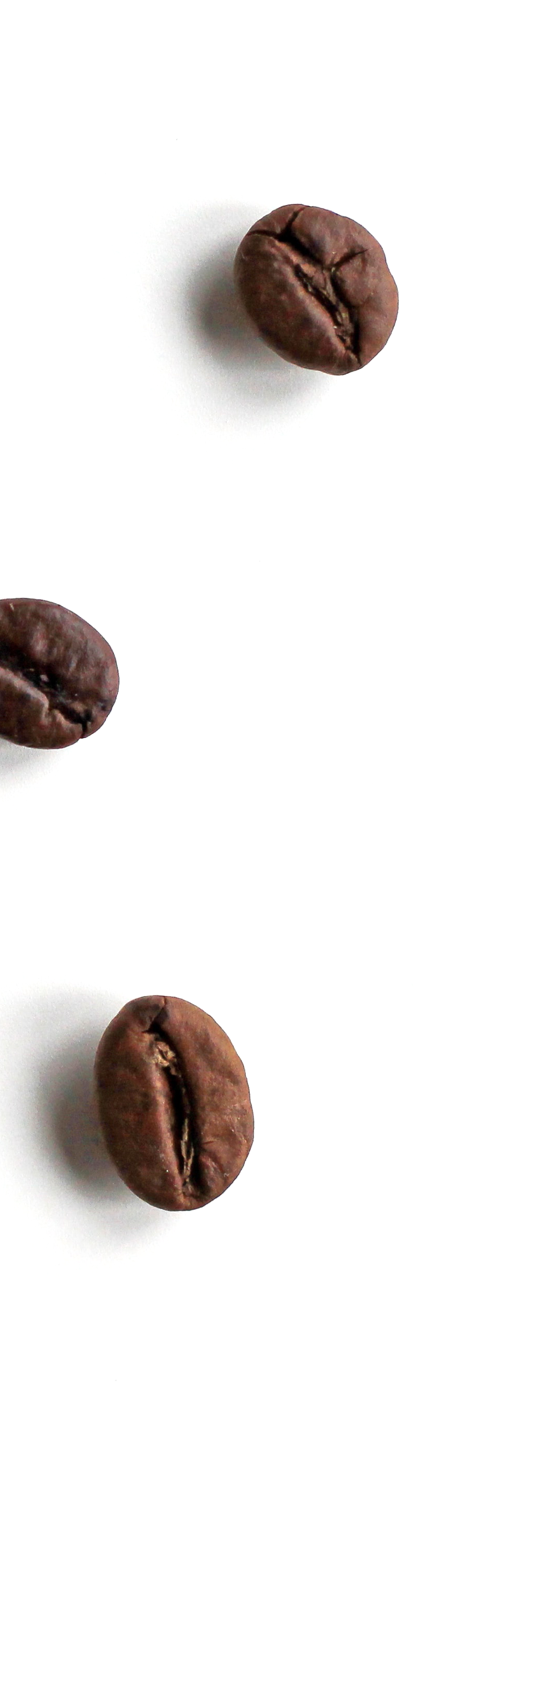 coffee bean parallax image